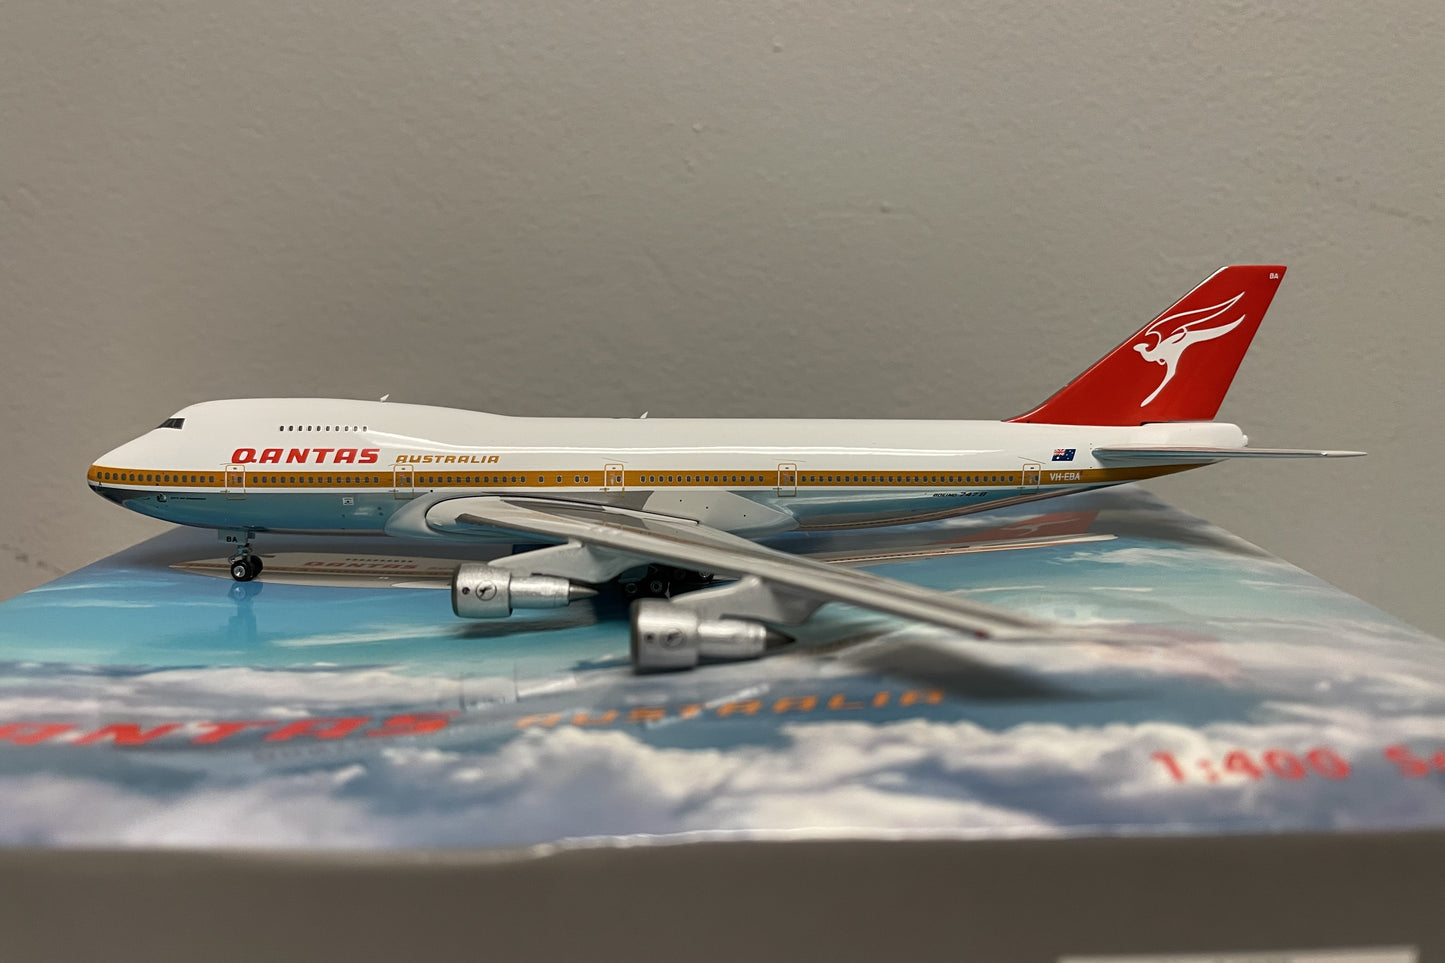 1:400 Phoenix Models Qantas Airways Boeing 747-200 "Polished" VH-EBA PH4377